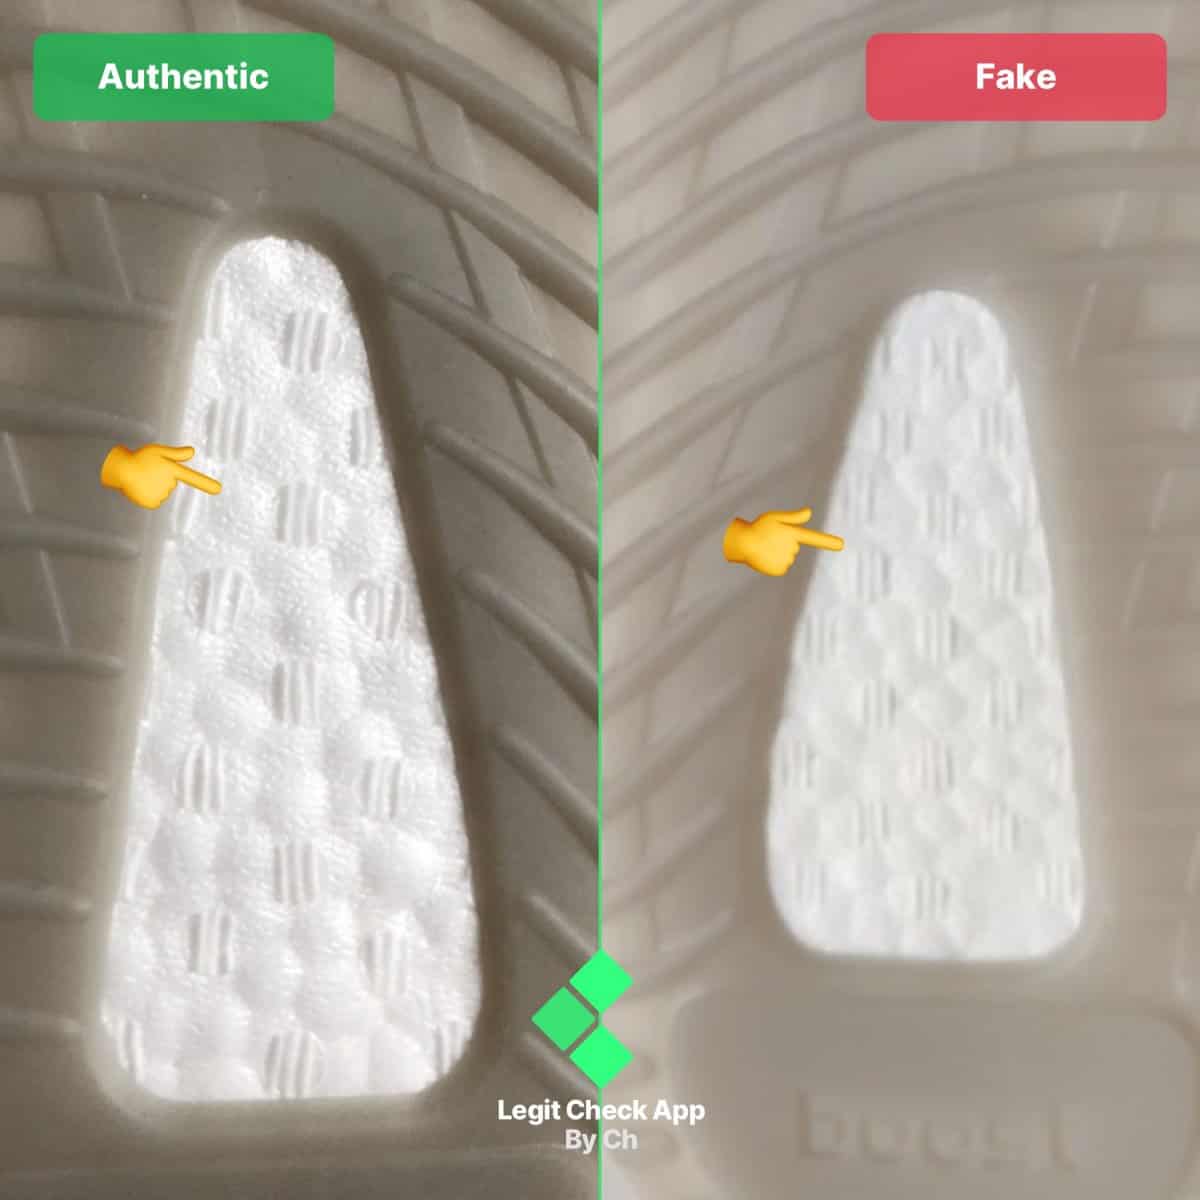 real vs fake tail light